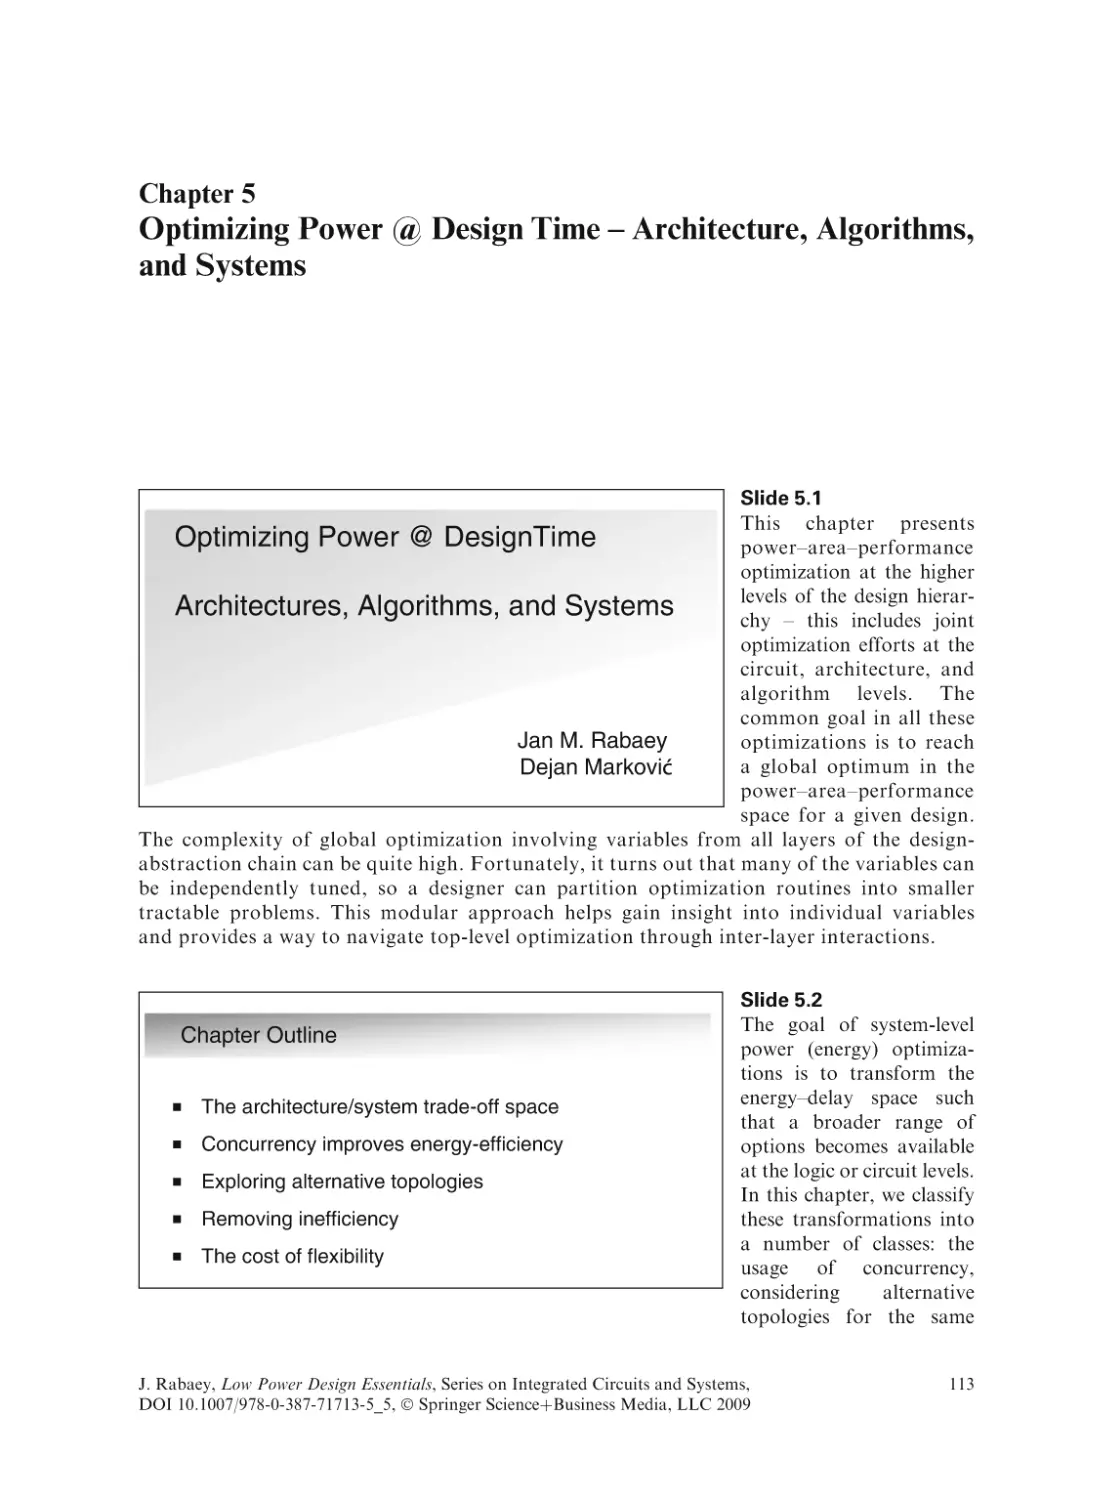 Optimizing Power @ Design Time - Architecture, Algorithms, and Systems
Slide 5.1
Slide 5.2